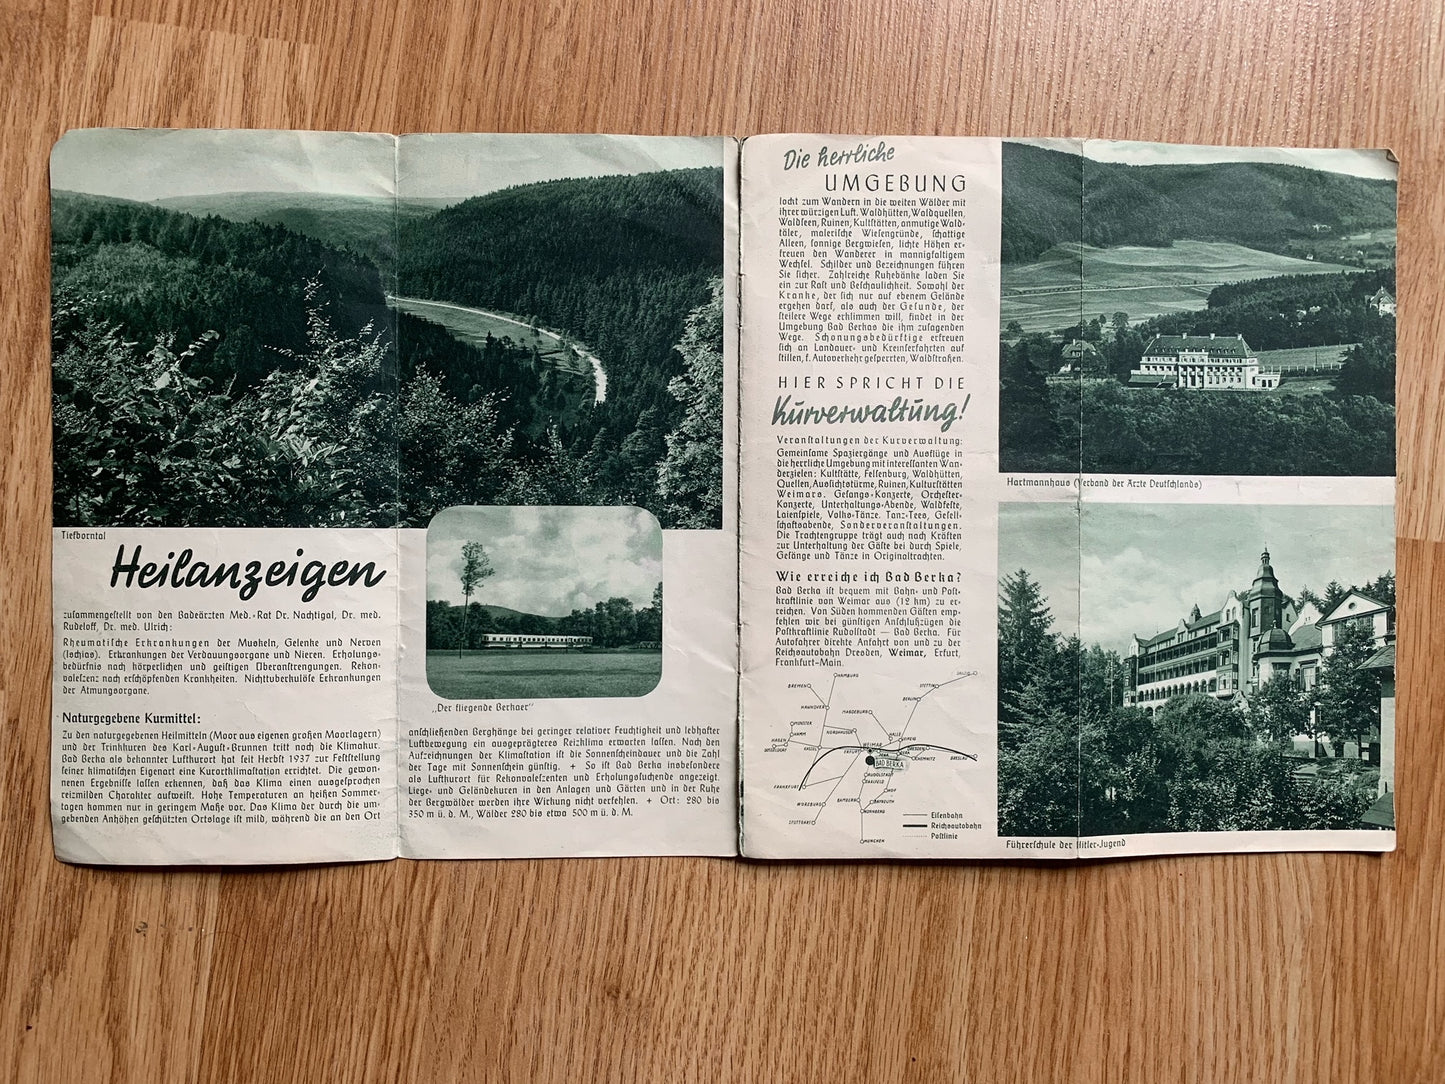 German 1939 tourism pamphlet - Bad Berka spa